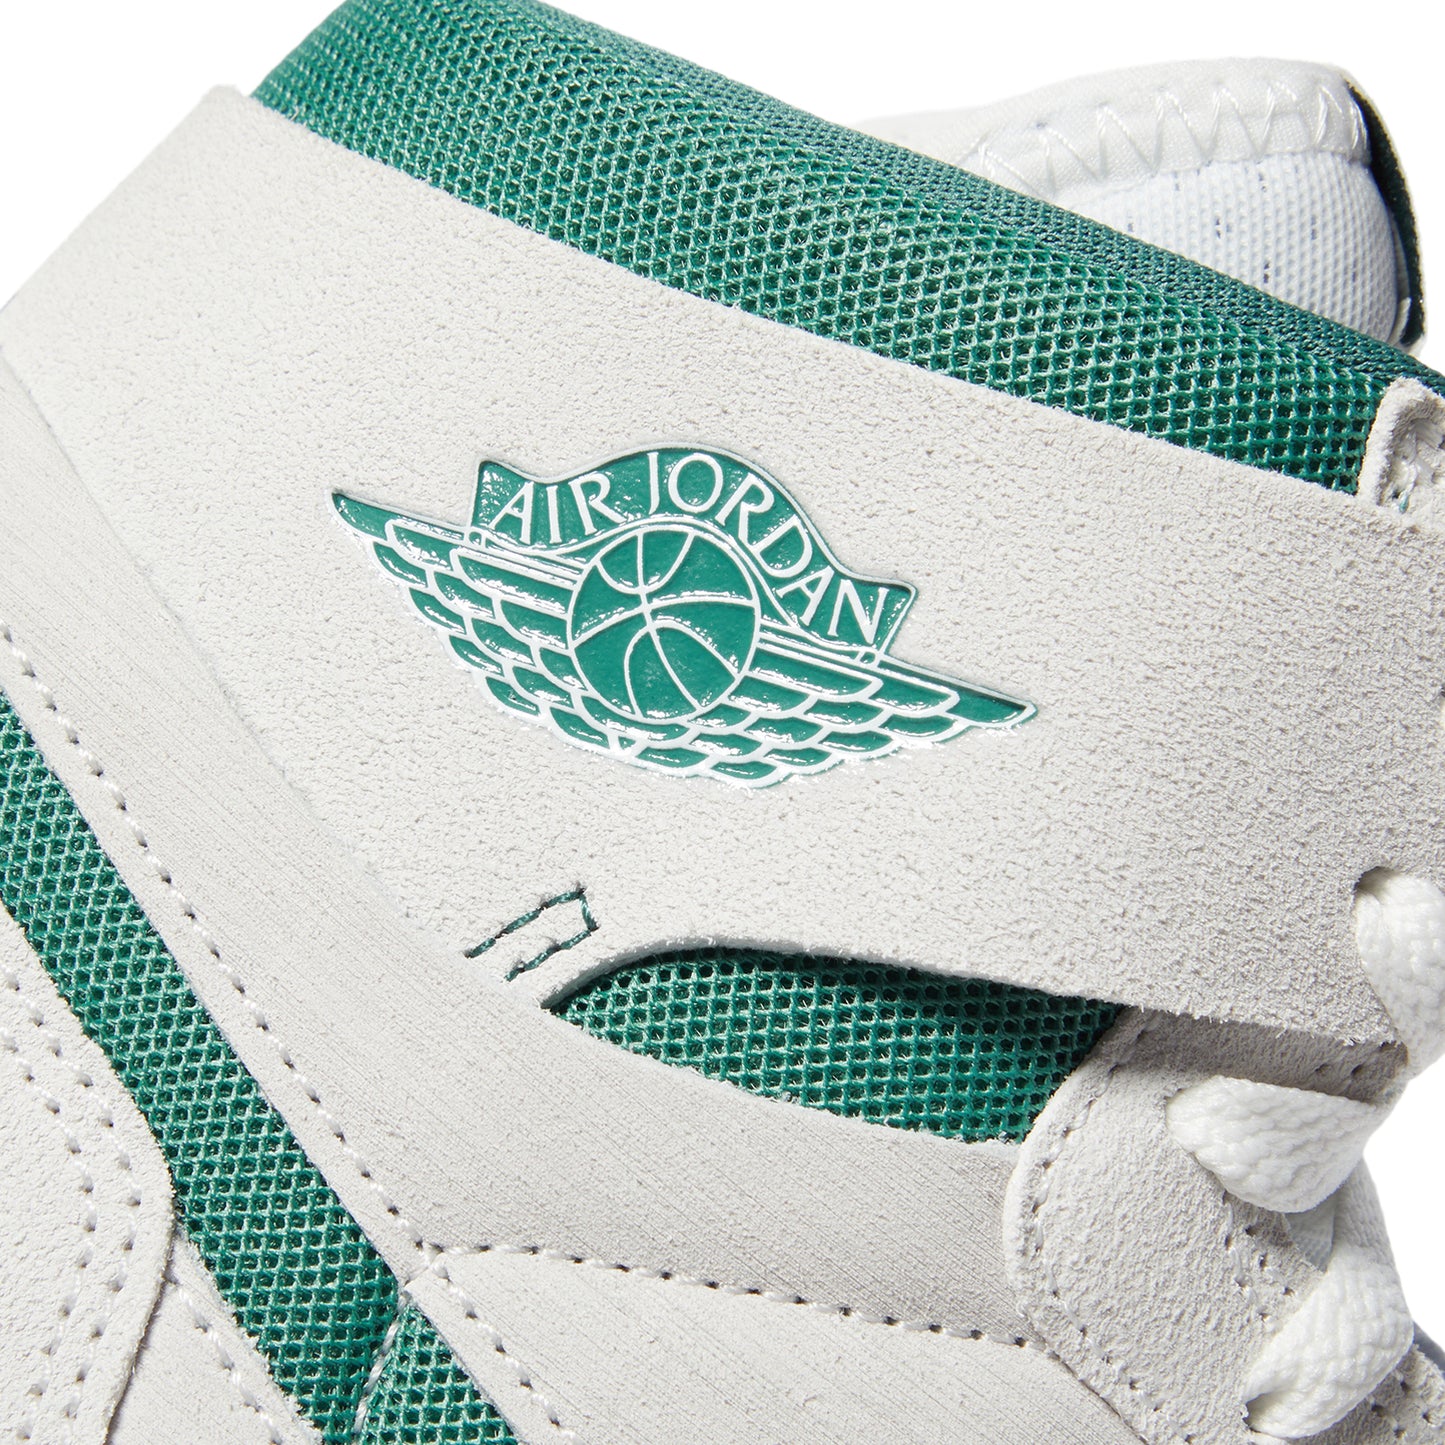 Nike Air Jordan 1 Zoom CMFT 2 (Summit White/Bicoastal/Oxidized Green)